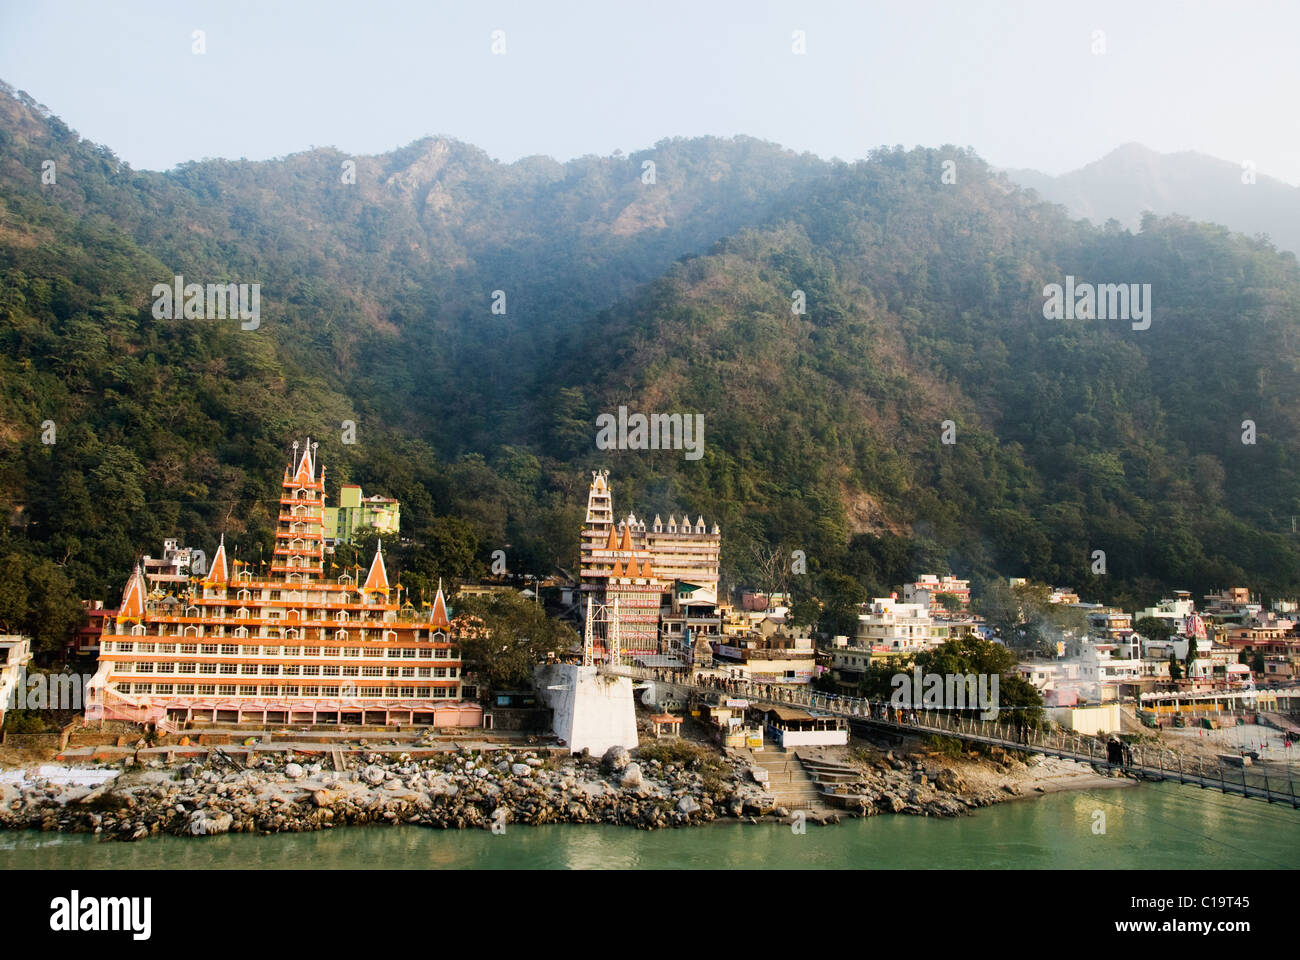 Temples at the riverbank, Swarg Niwas Temple, Lakshman Jhula, Ganges River, Rishikesh, Uttarakhand, India Stock Photo